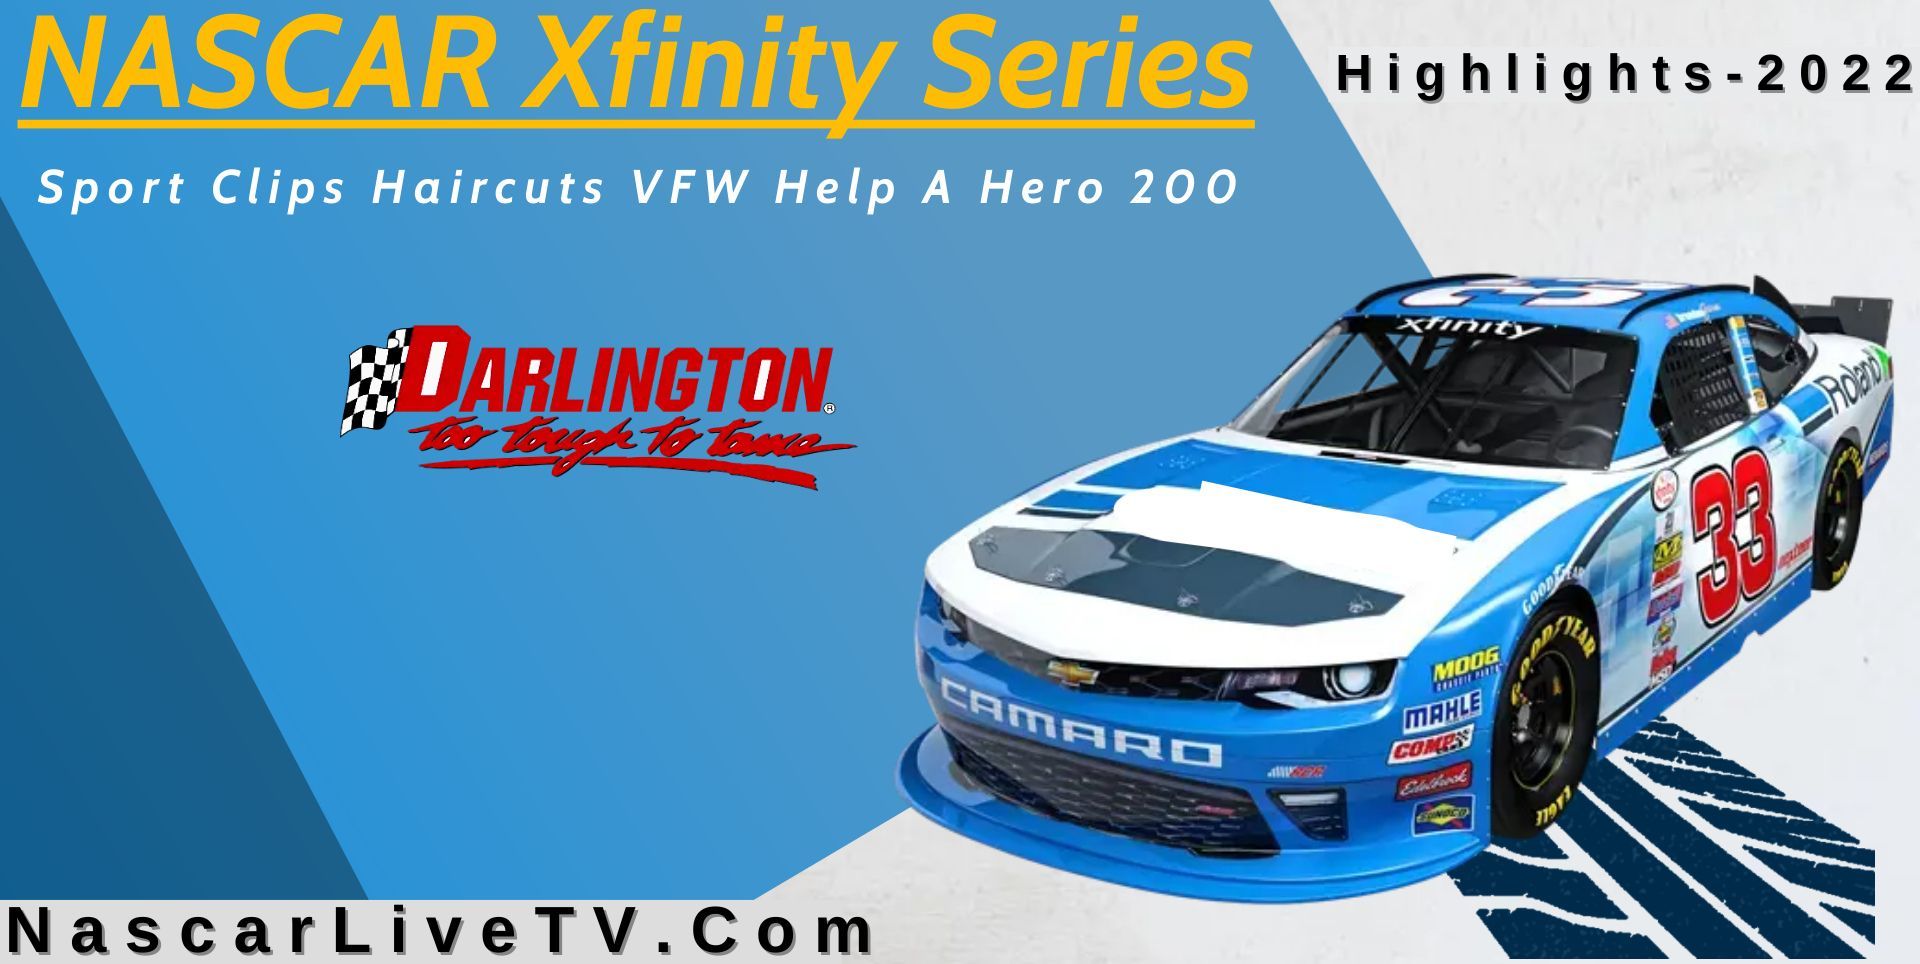 Sport Clips Haircuts VFW Help A Hero 200 Highlights NASCAR 2022